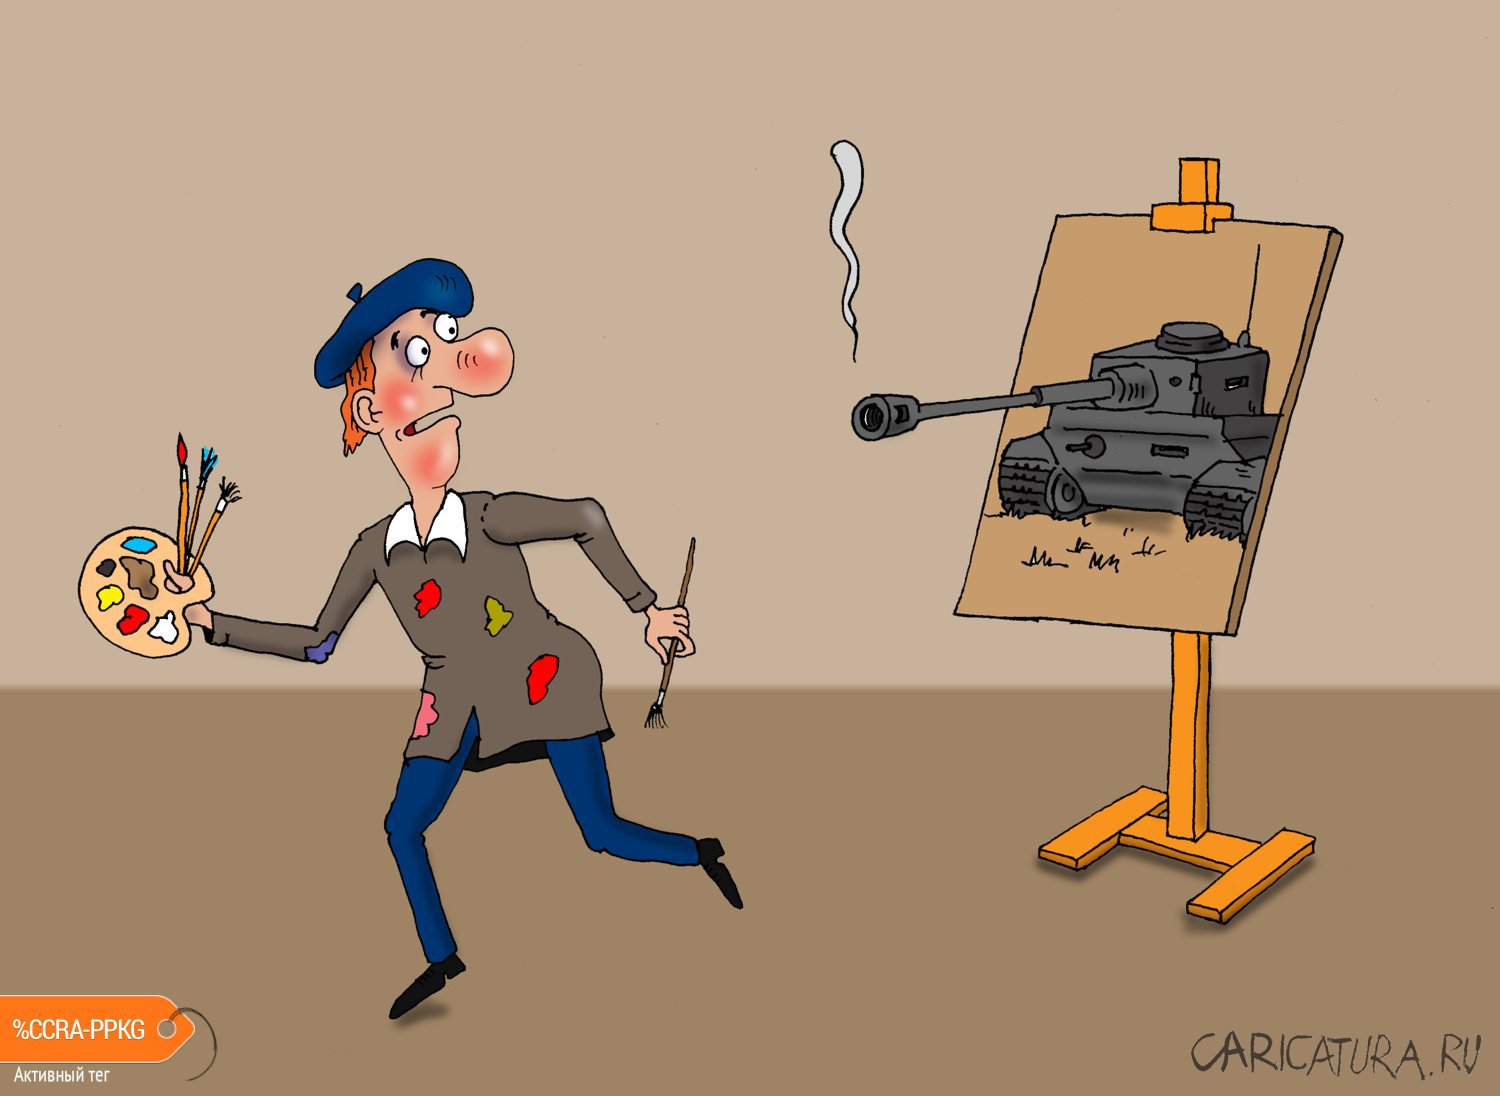 Карикатура "Художник и художества", Валерий Тарасенко